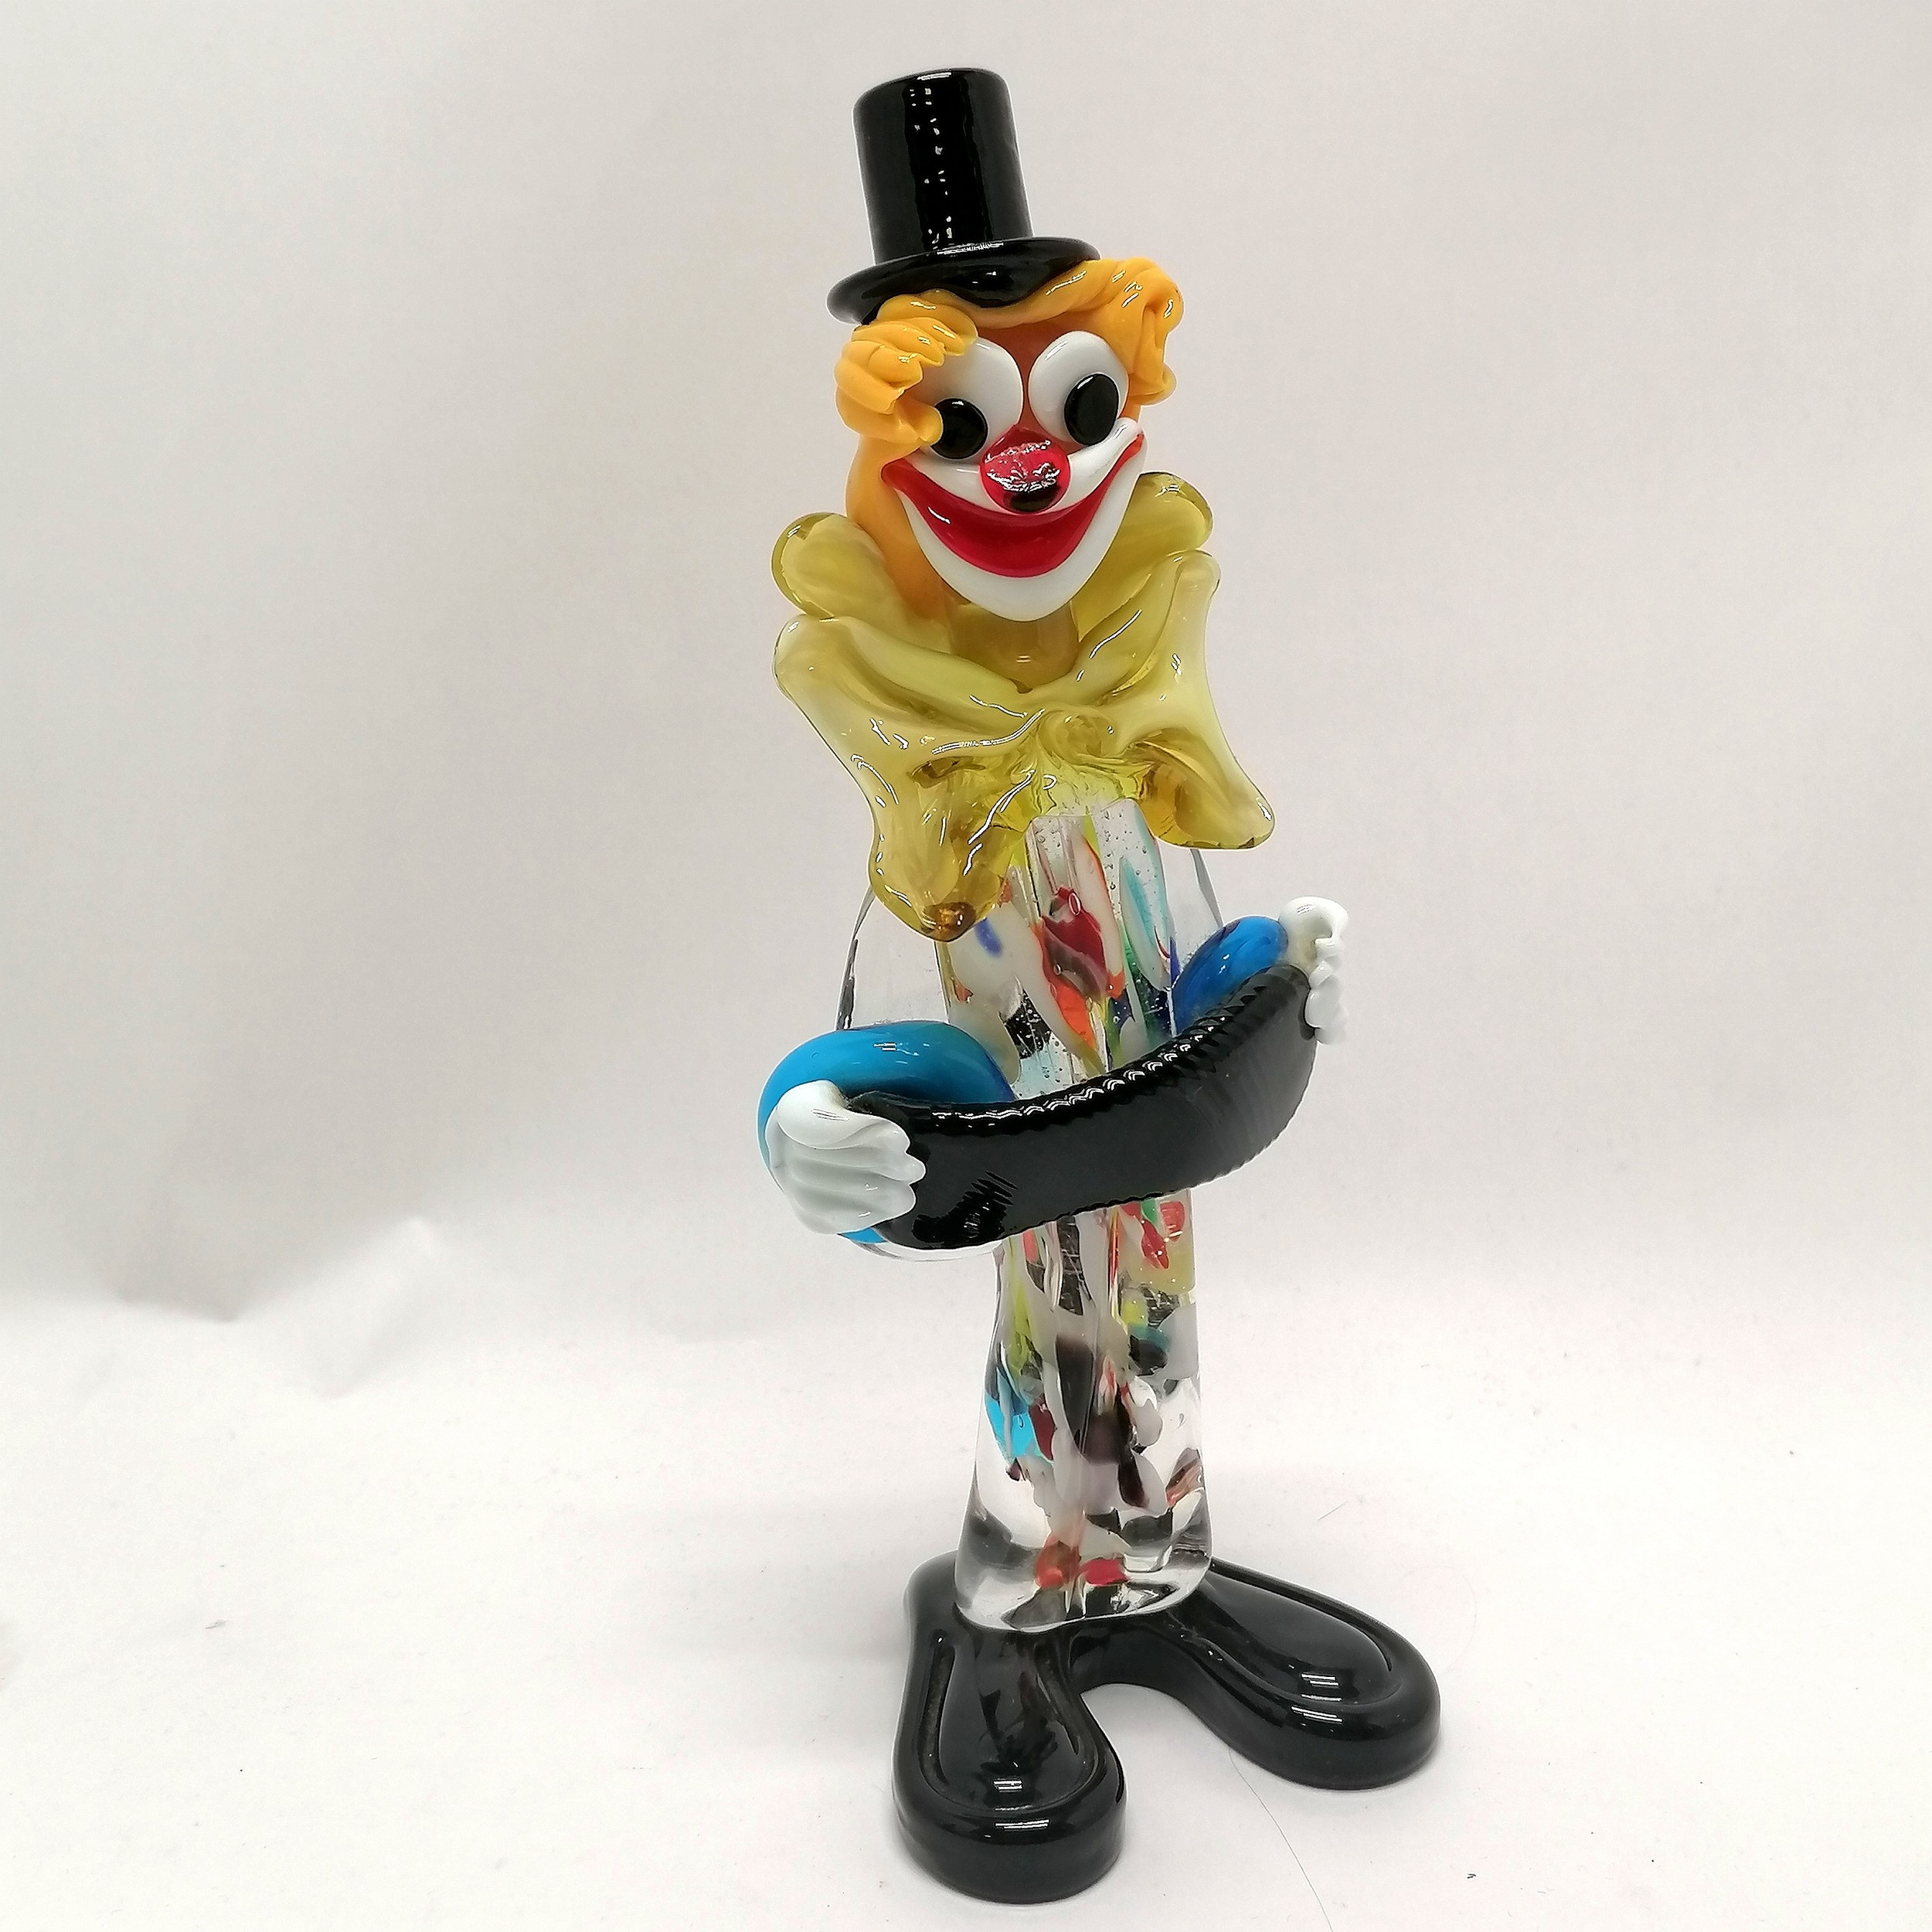 Murano glass clown 25cm high - no obvious damage